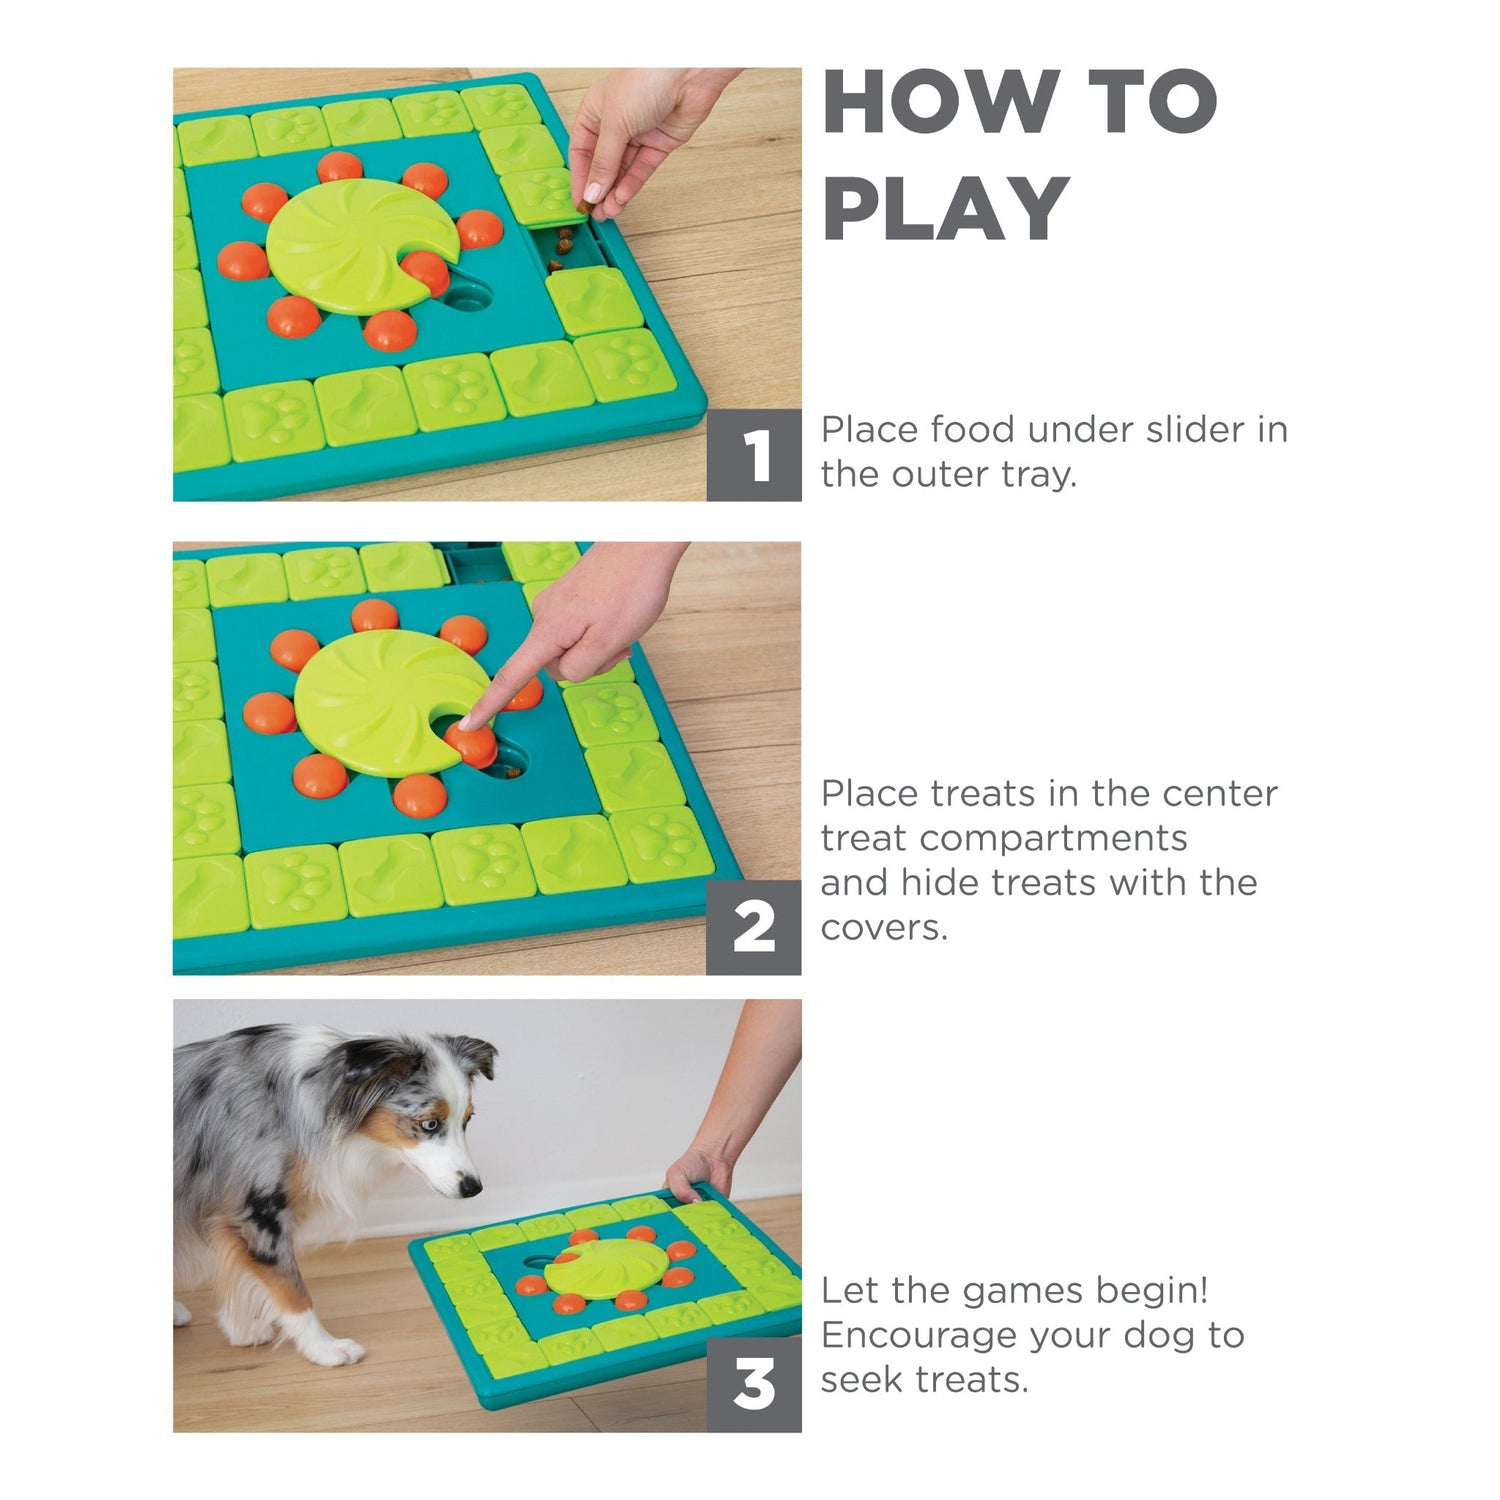 Challenge Slider Interactive Treat Puzzle Game Dog Toy